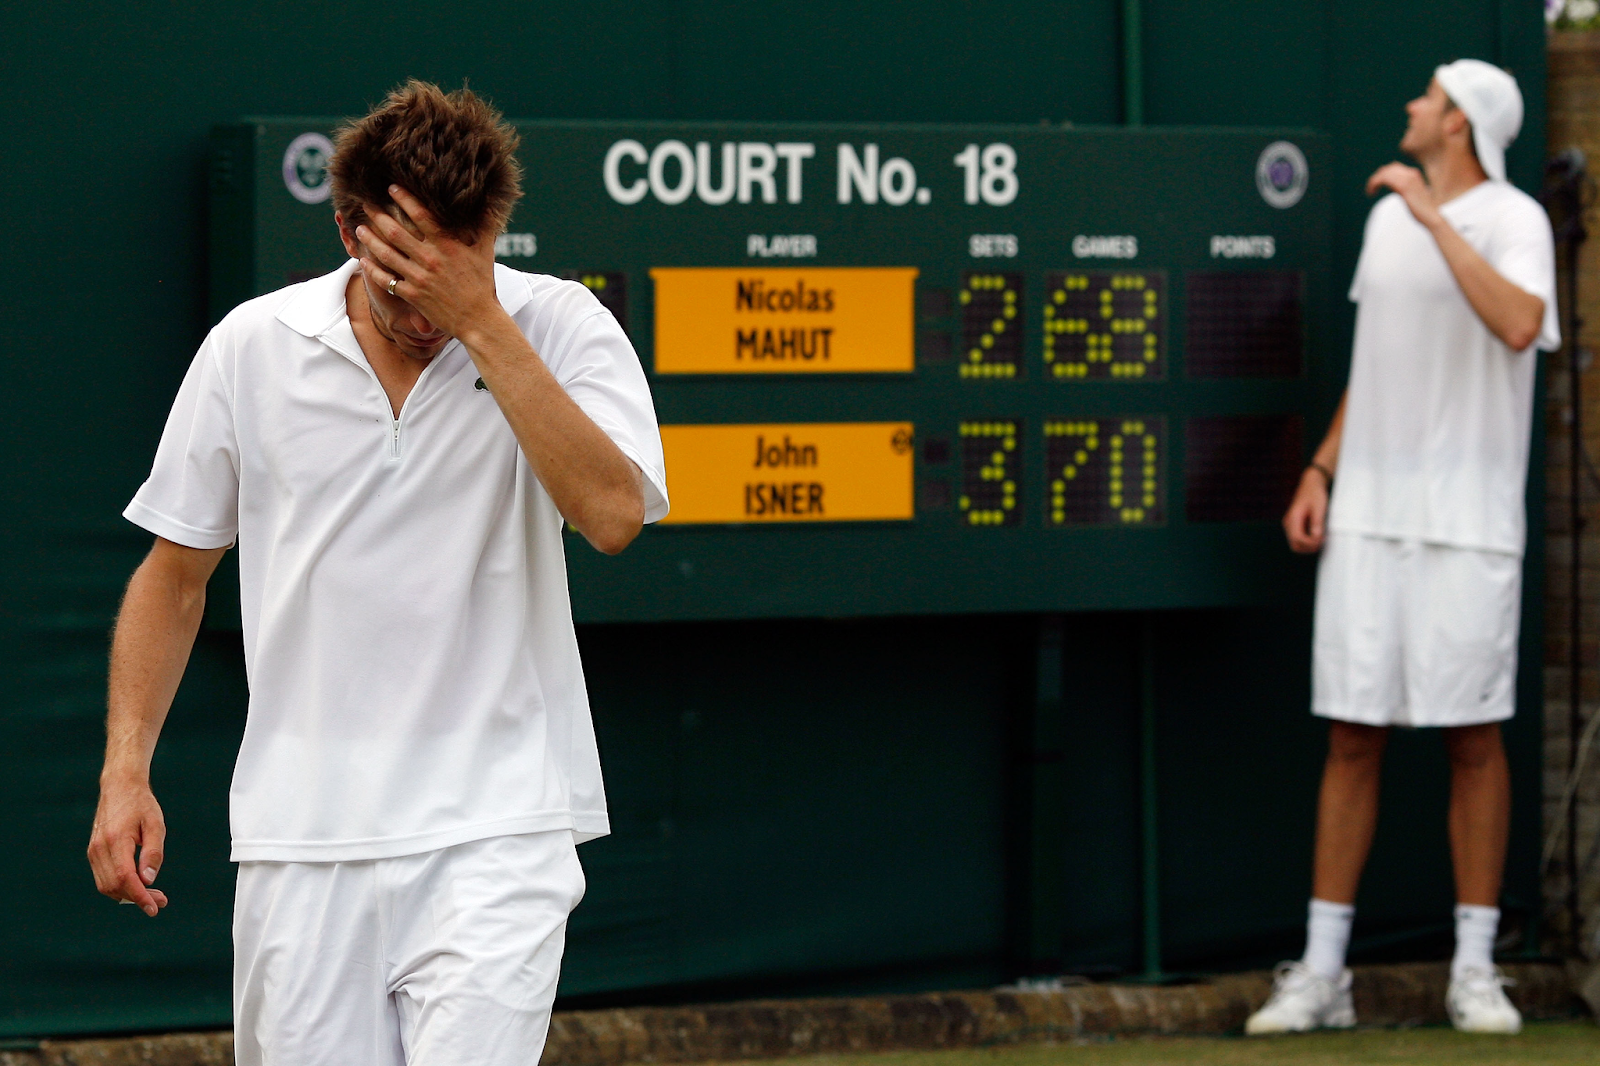 John Isner vs. Nicolas Mahut - 2010 Wimbledon - 11:05 (3 days) - Top Most Longest Tennis Matches